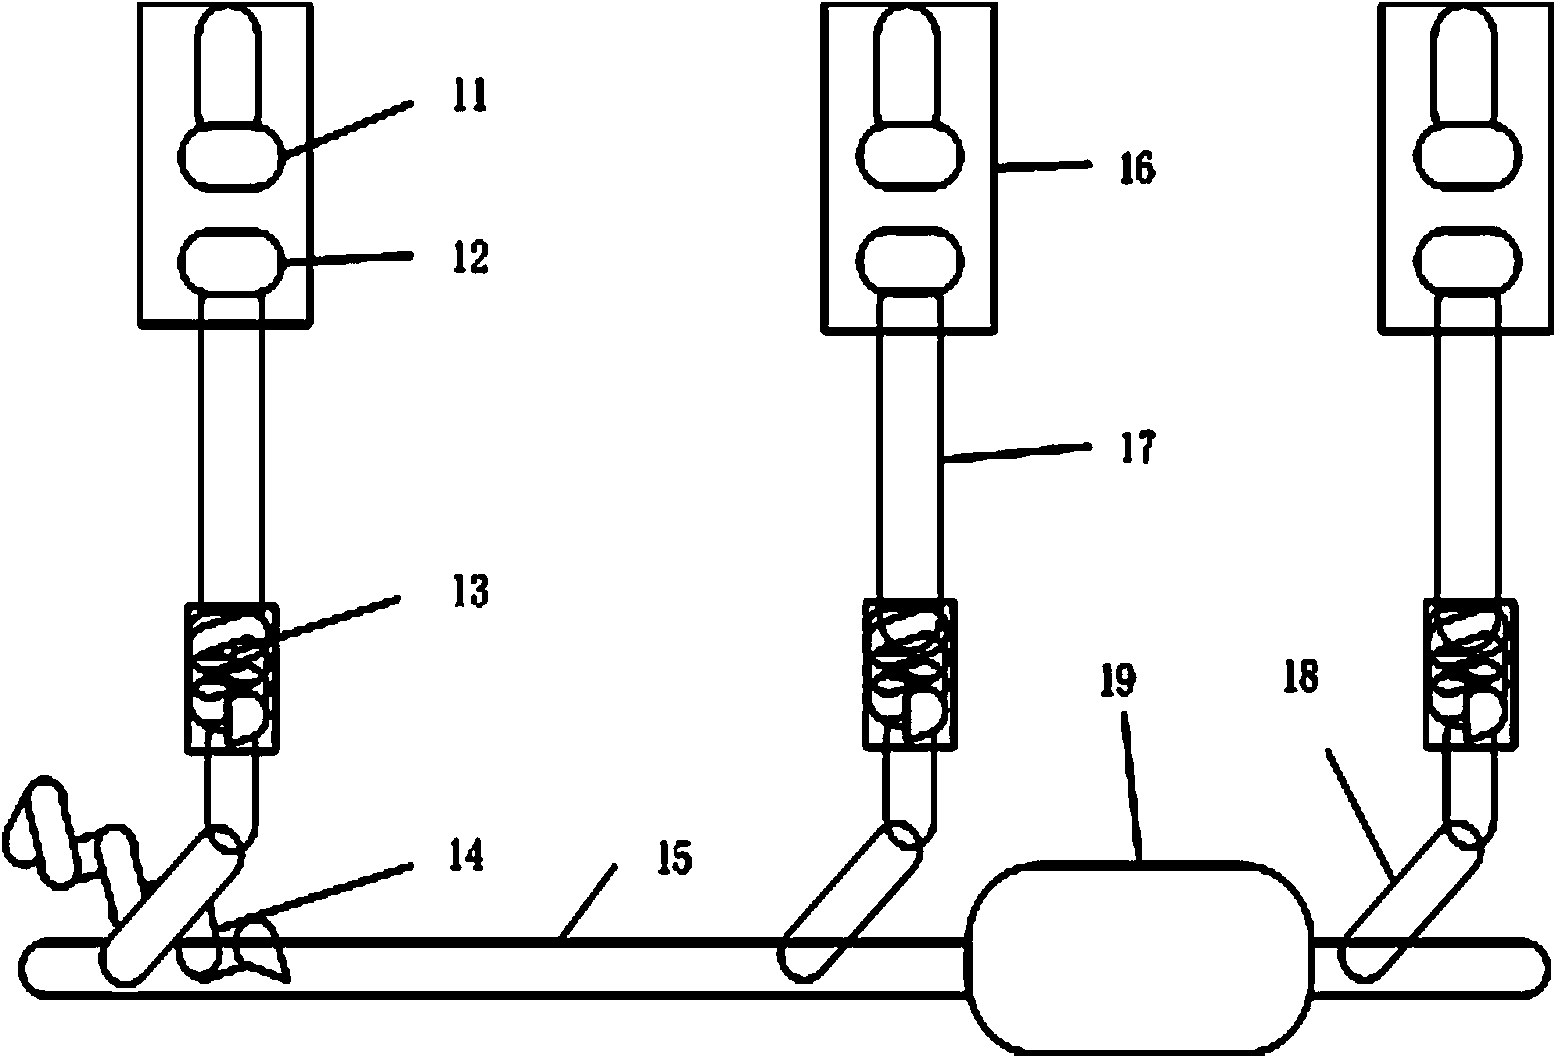 Motion characteristic joint simulation model of permanent magnet operating mechanism breaker and method of motion characteristic joint simulation model of permanent magnet operating mechanism breaker